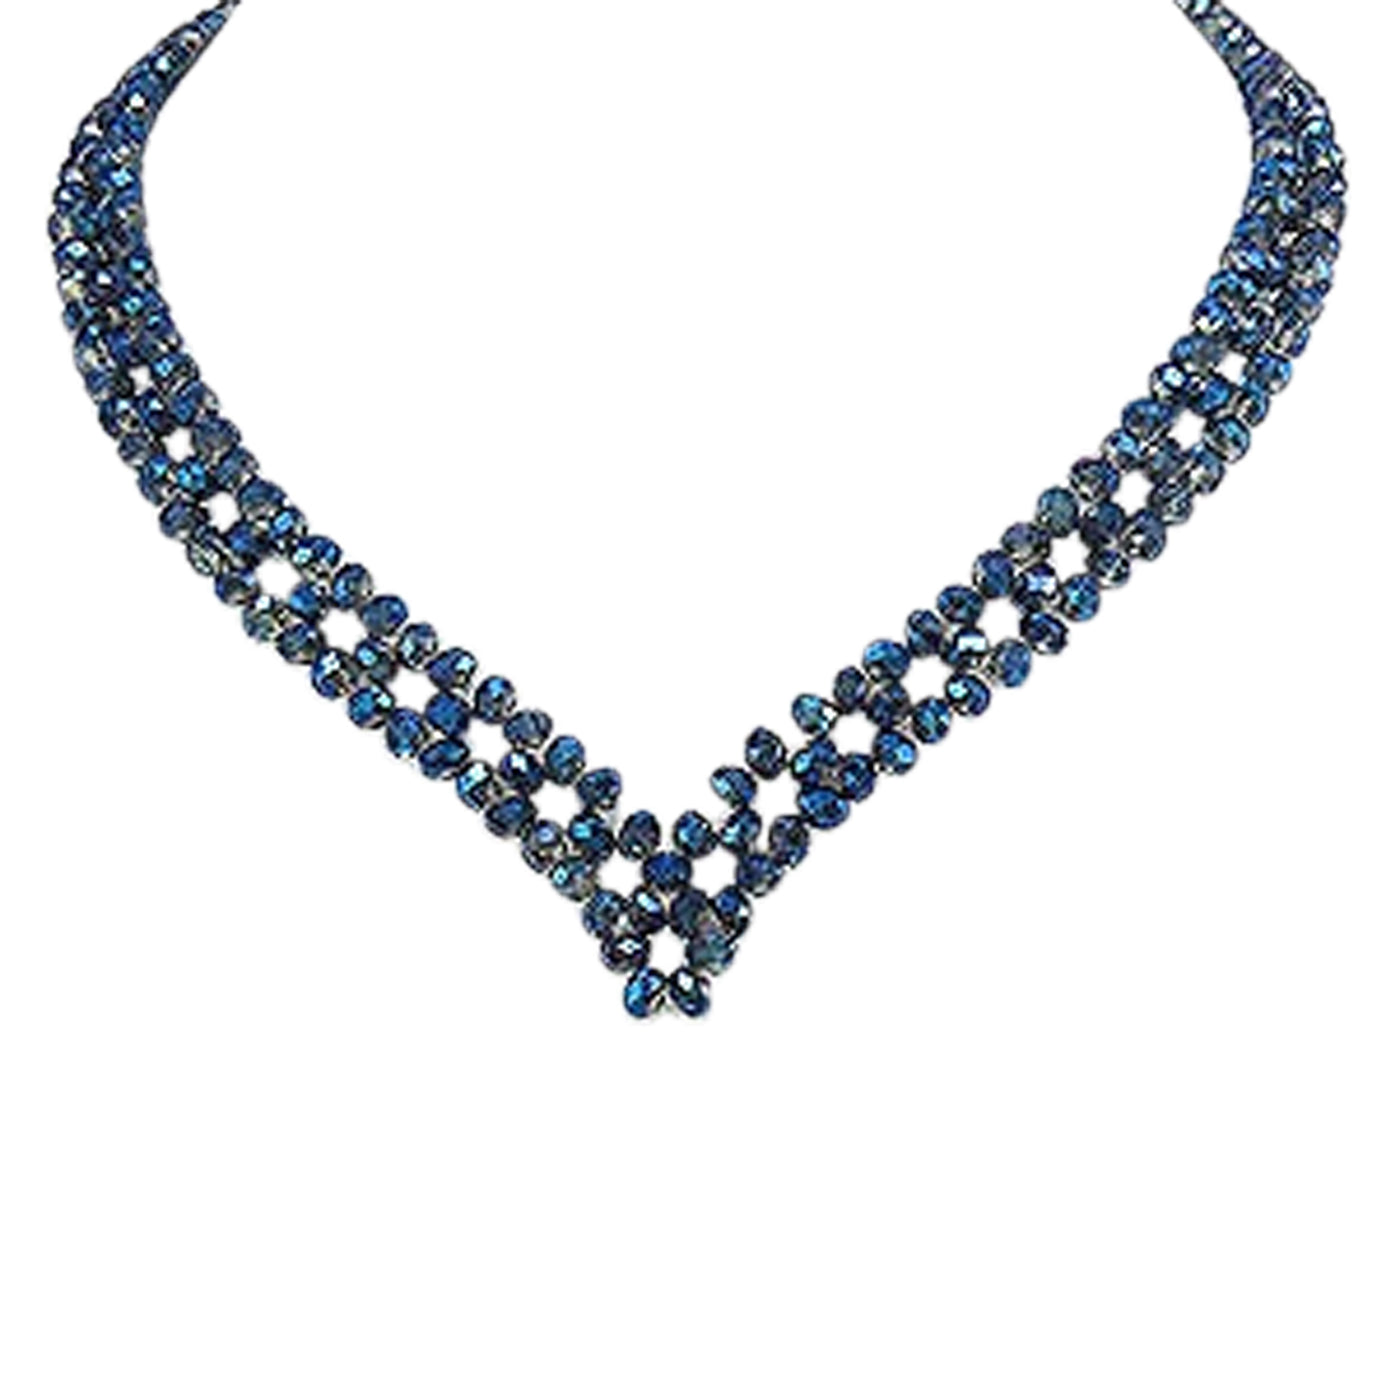 Crystal & Seed Bead Collar Necklace